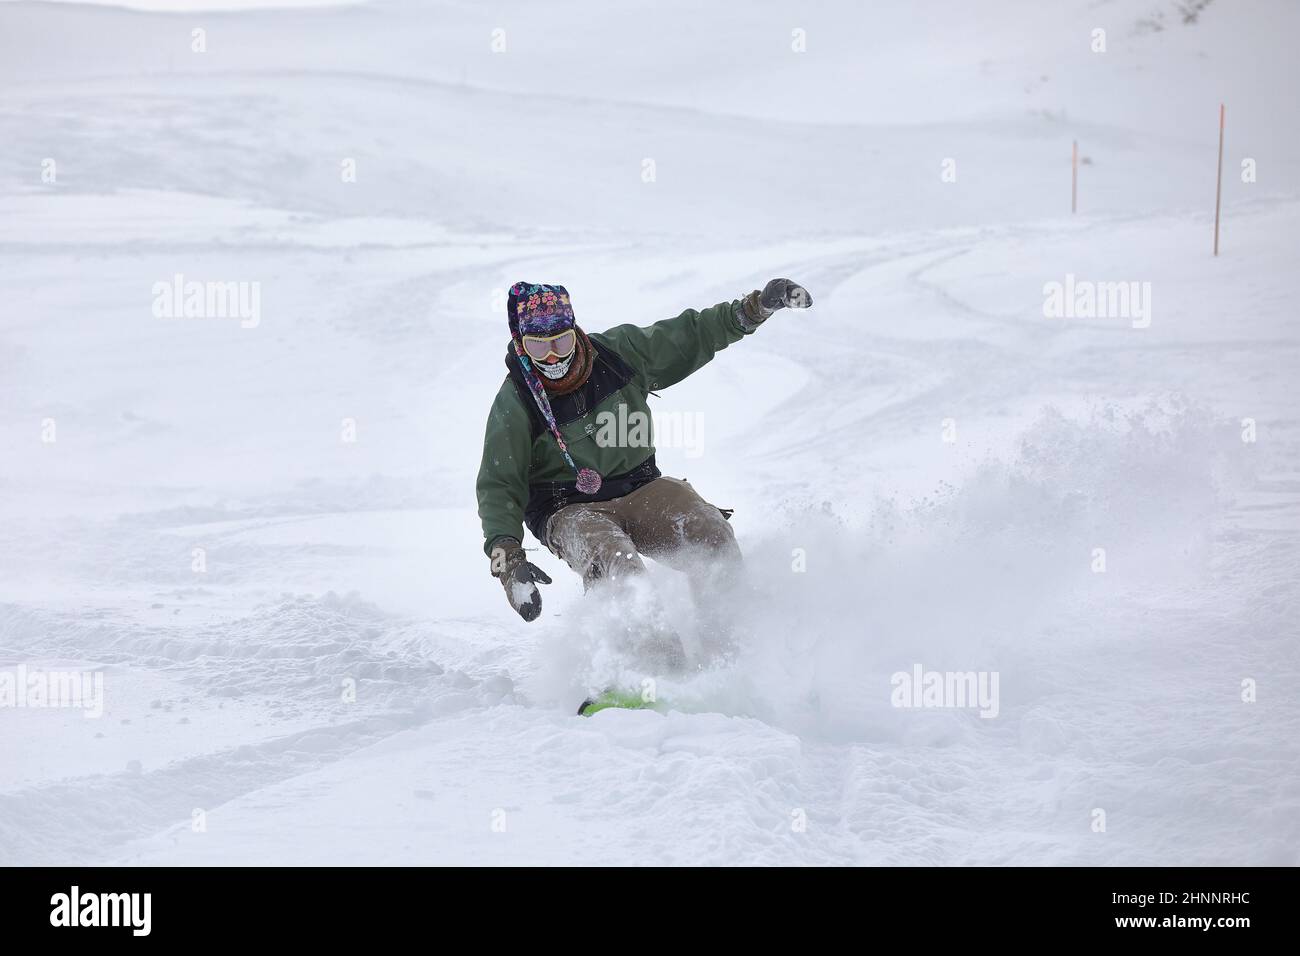 Snowboarding in fresh powder snow Stock Photo